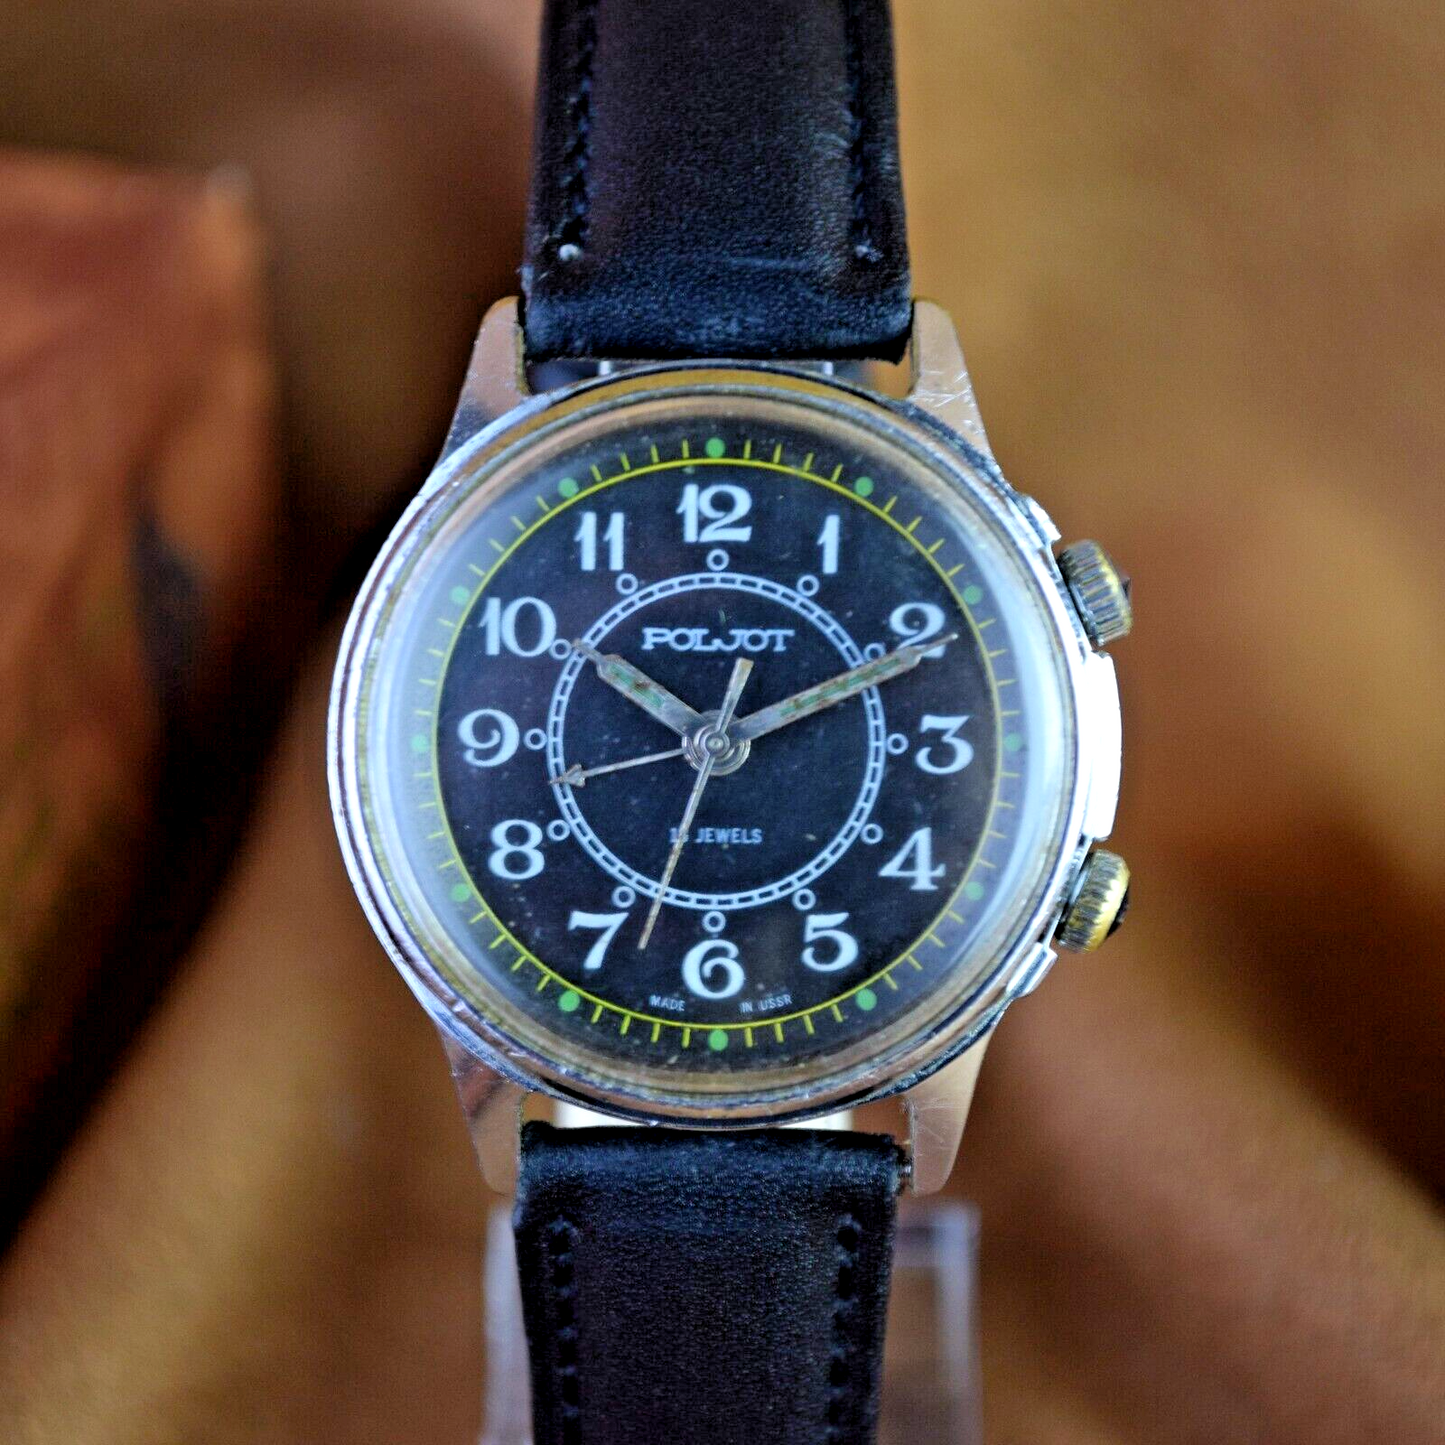 Soviet Wristwatch POLJOT Alarm Signal Vintage Russian USSR Mechanical Watch